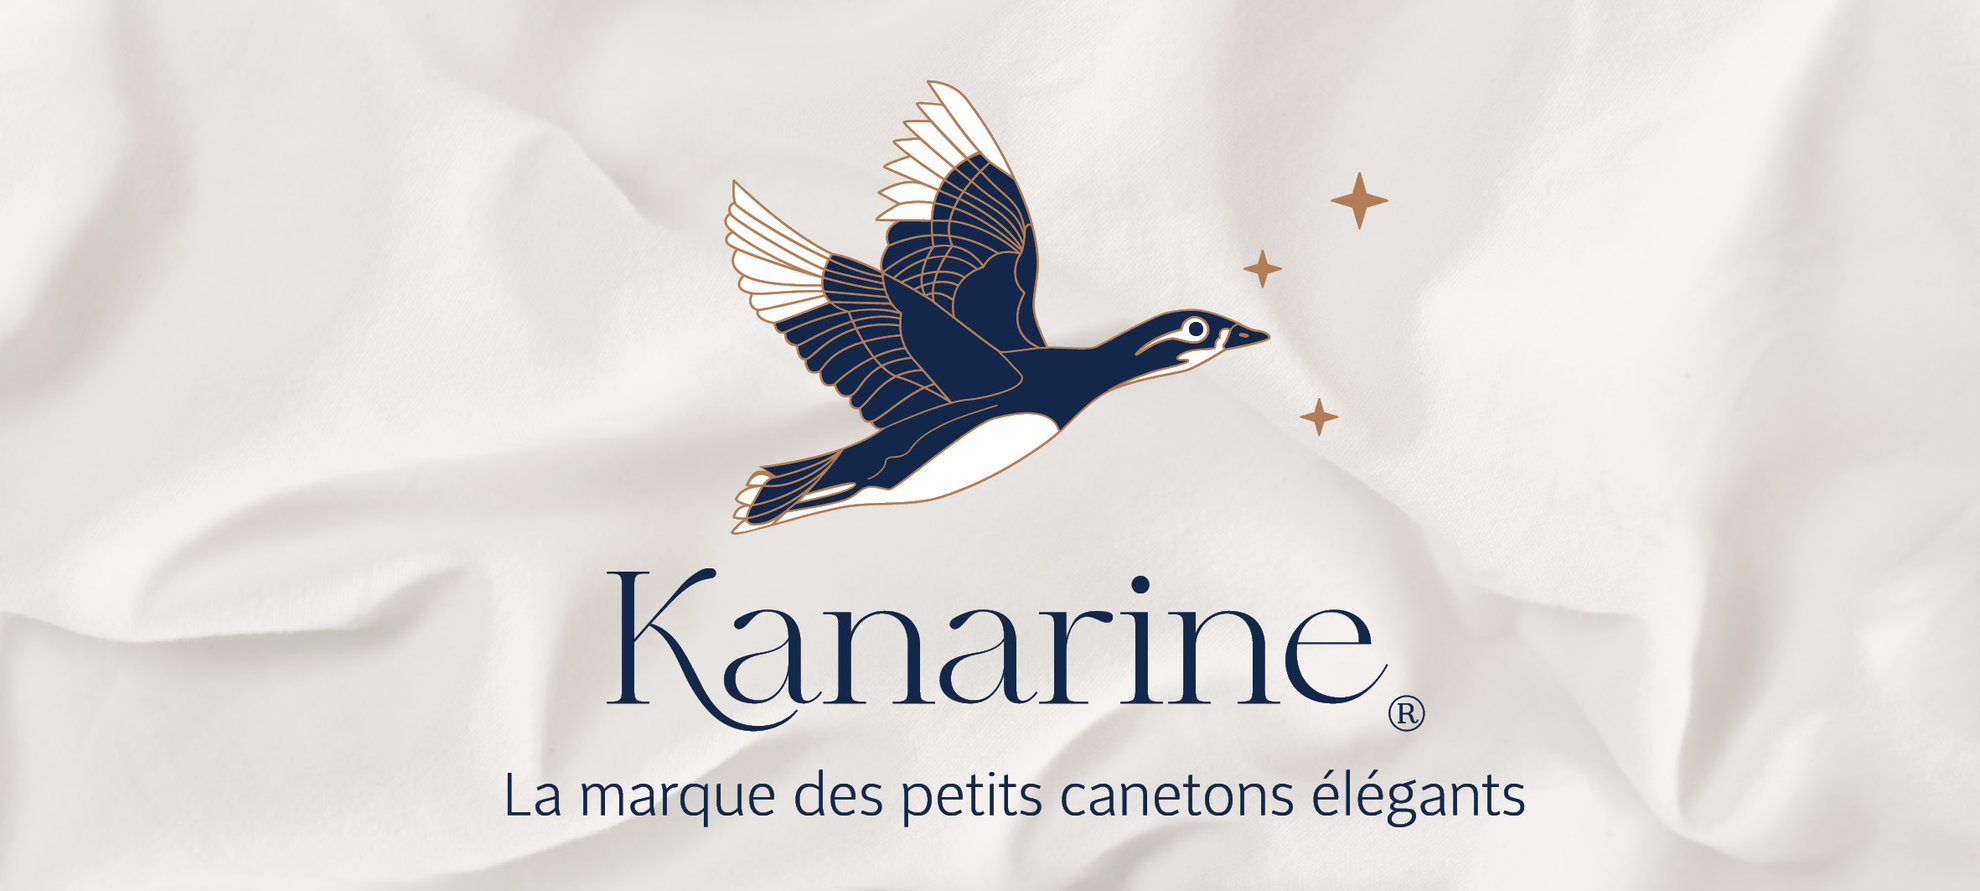 Identité de marque - Kanarine